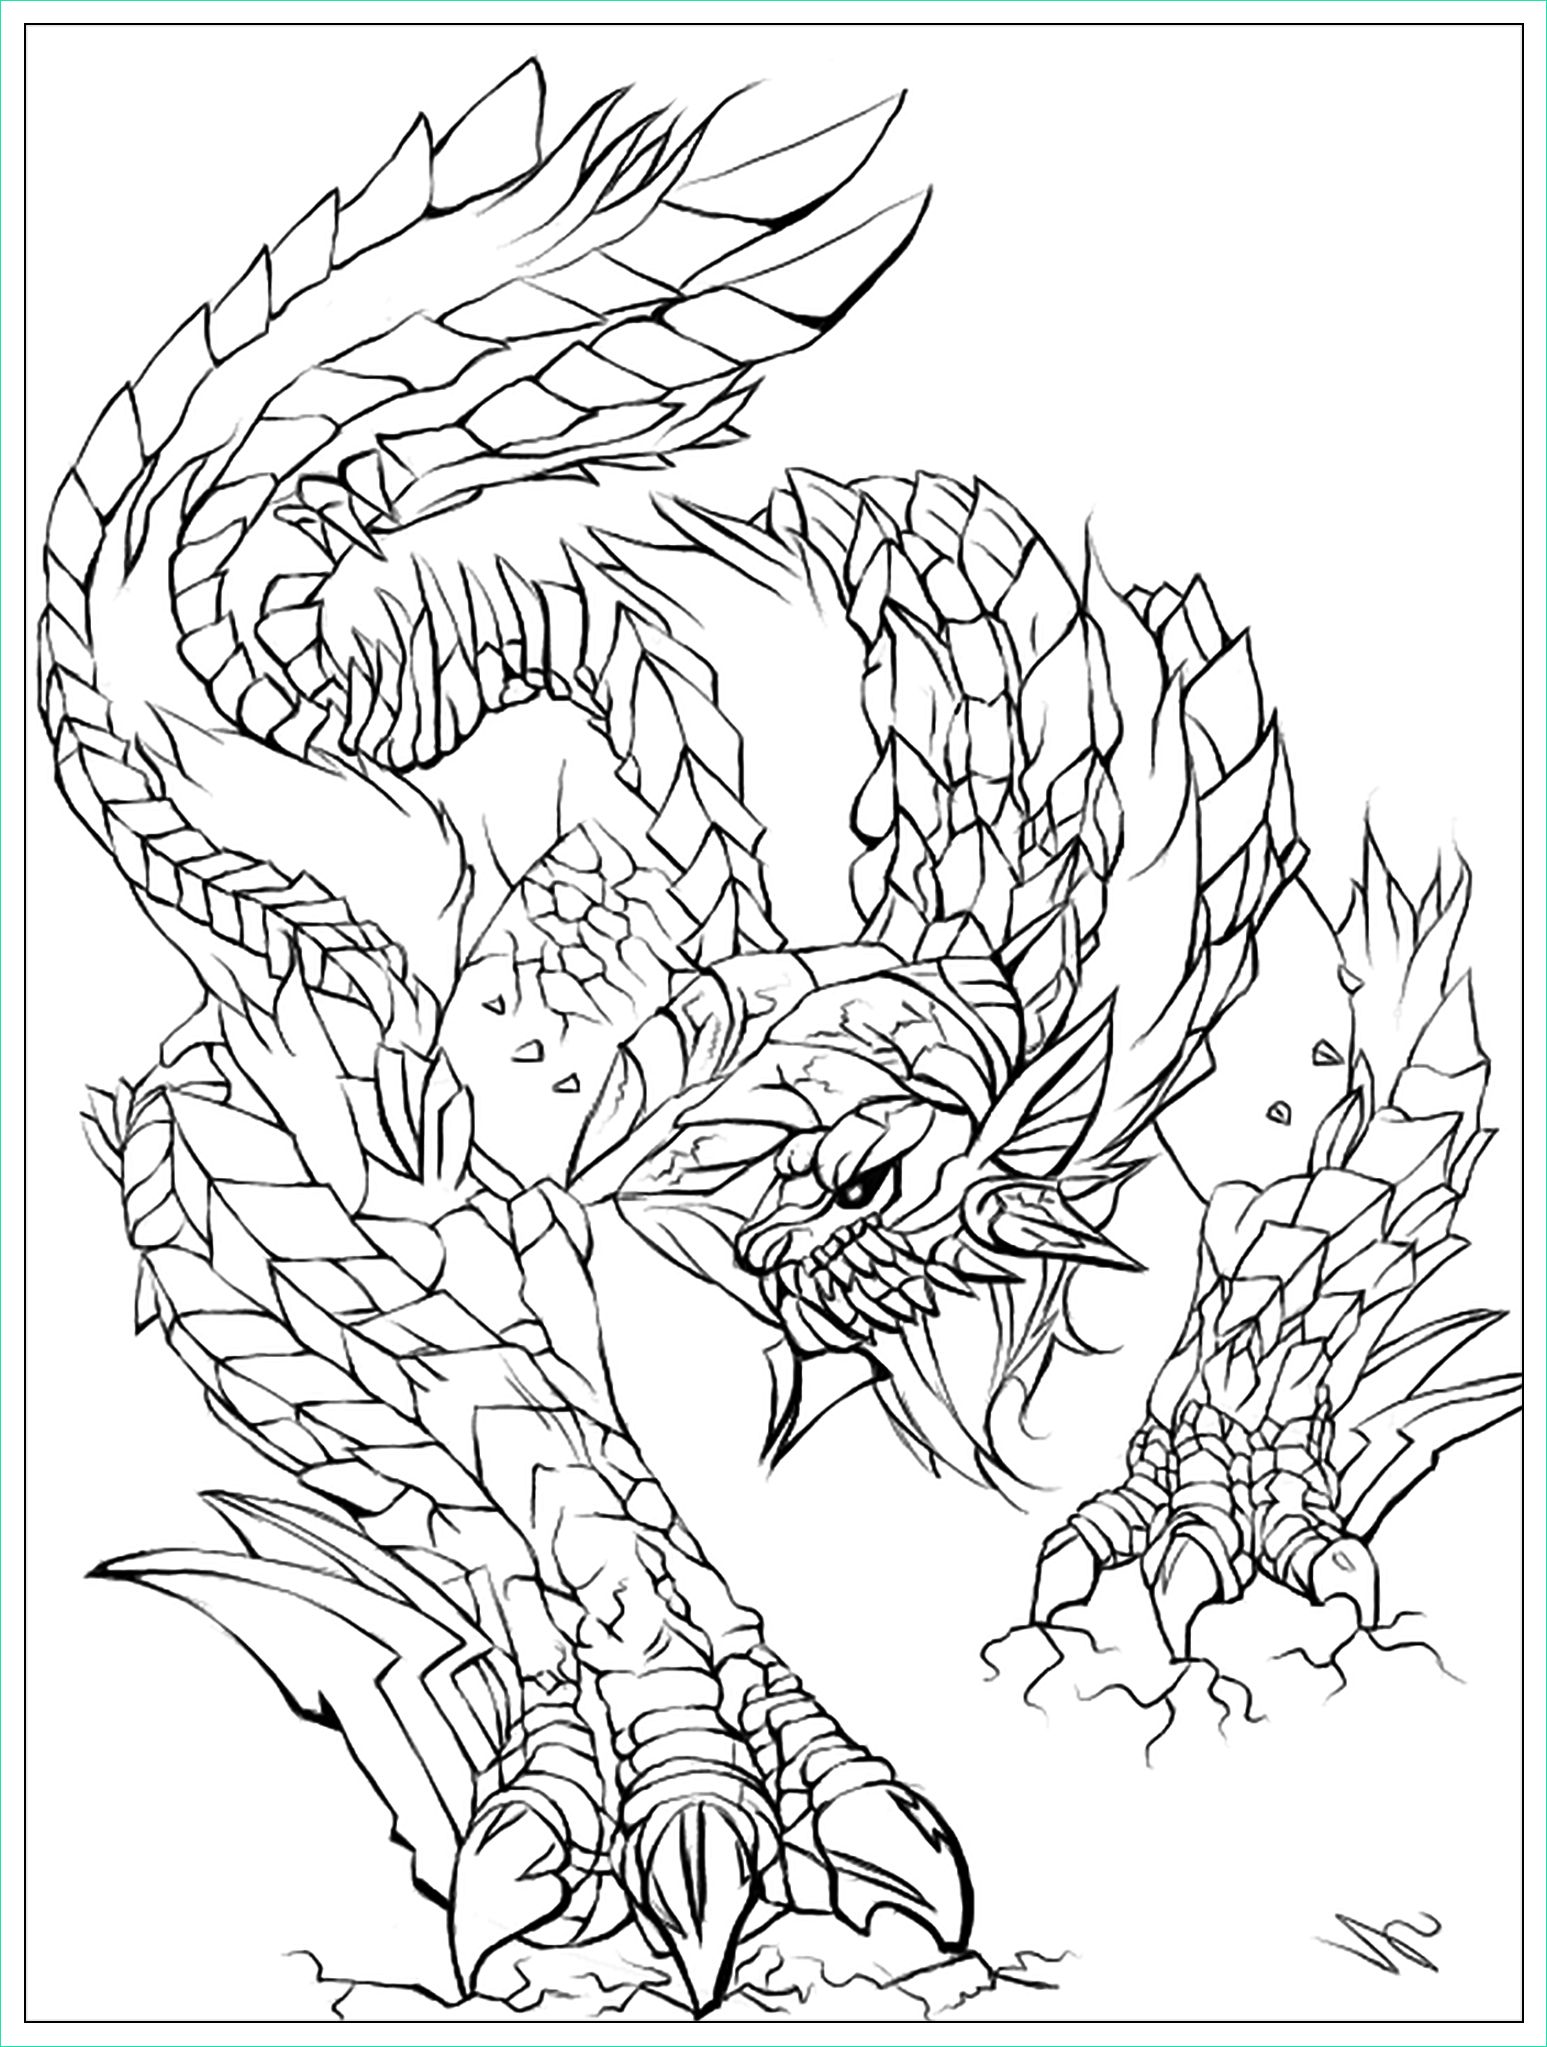 image=myths legends coloring page adult Monster by Juline 3